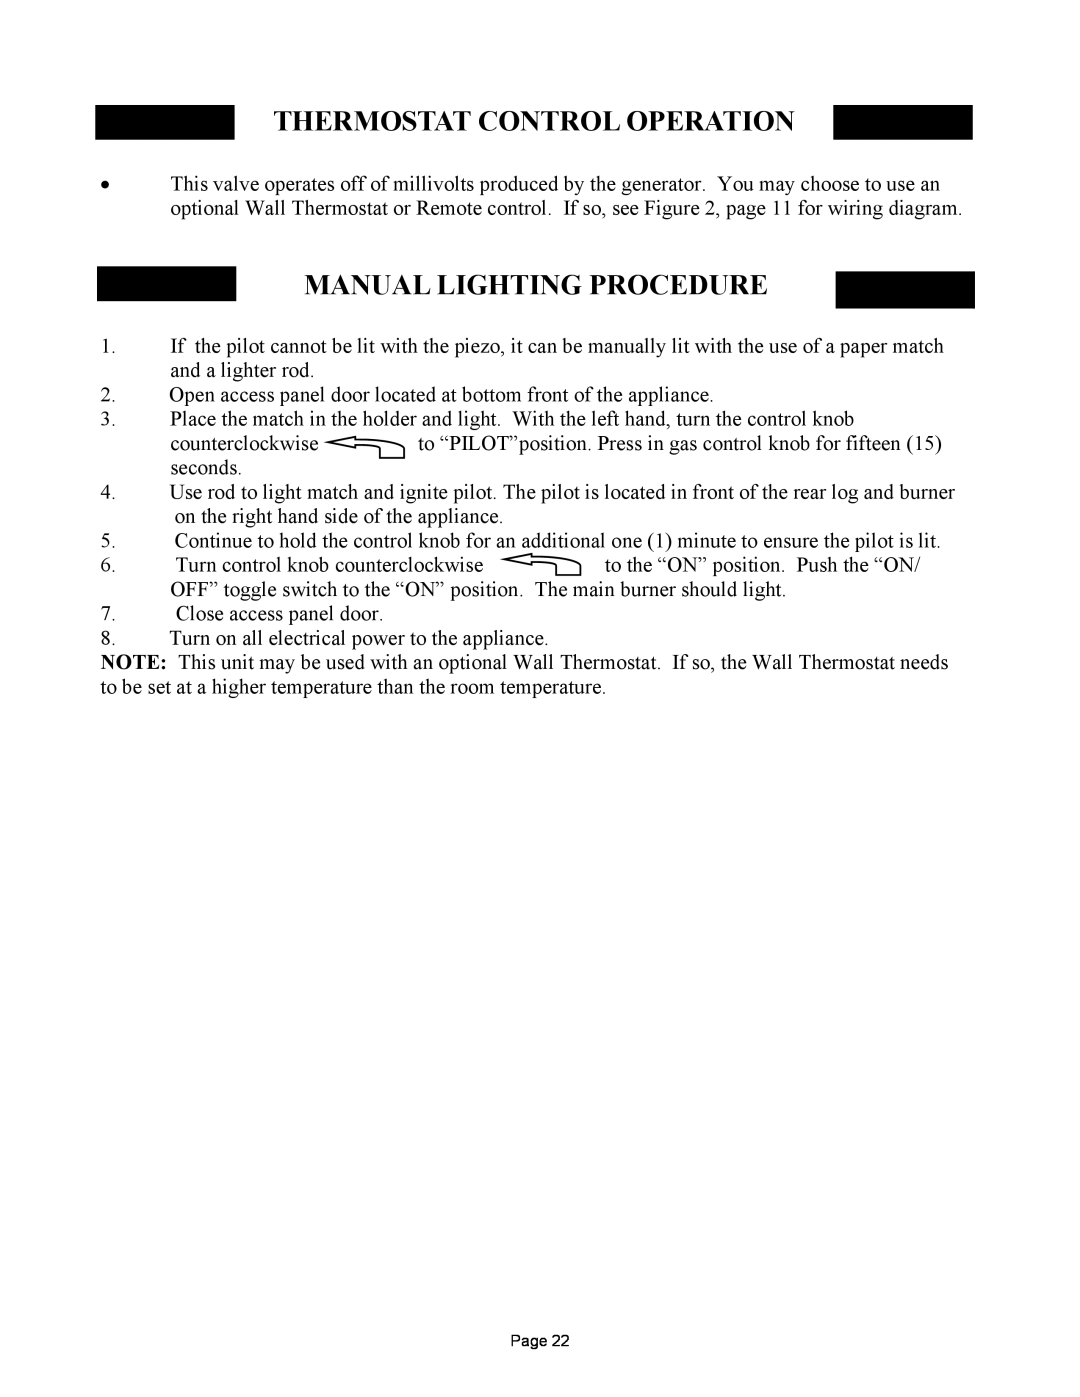 New Buck Corporation 32 manual Thermostat Control Operation, Manual Lighting Procedure 